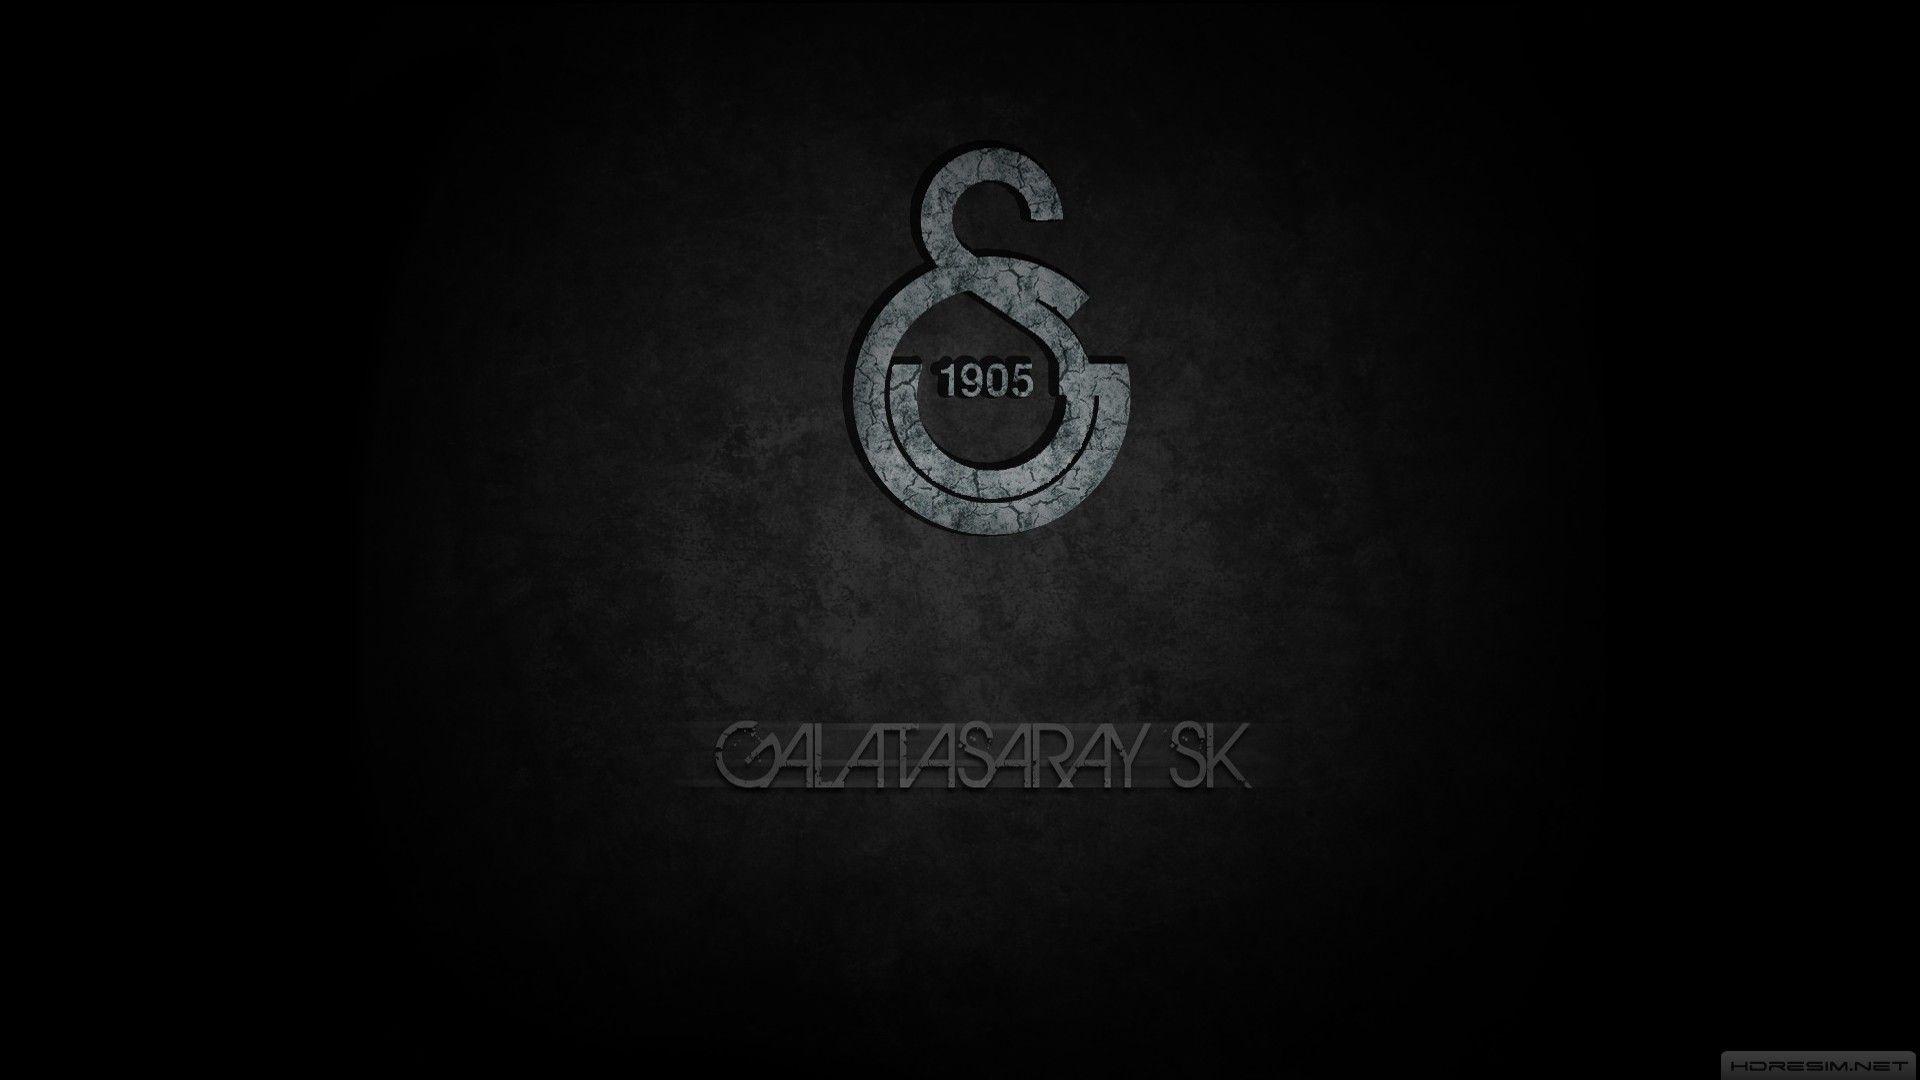 Fonds d&;écran Galatasaray, tous les wallpaper Galatasaray